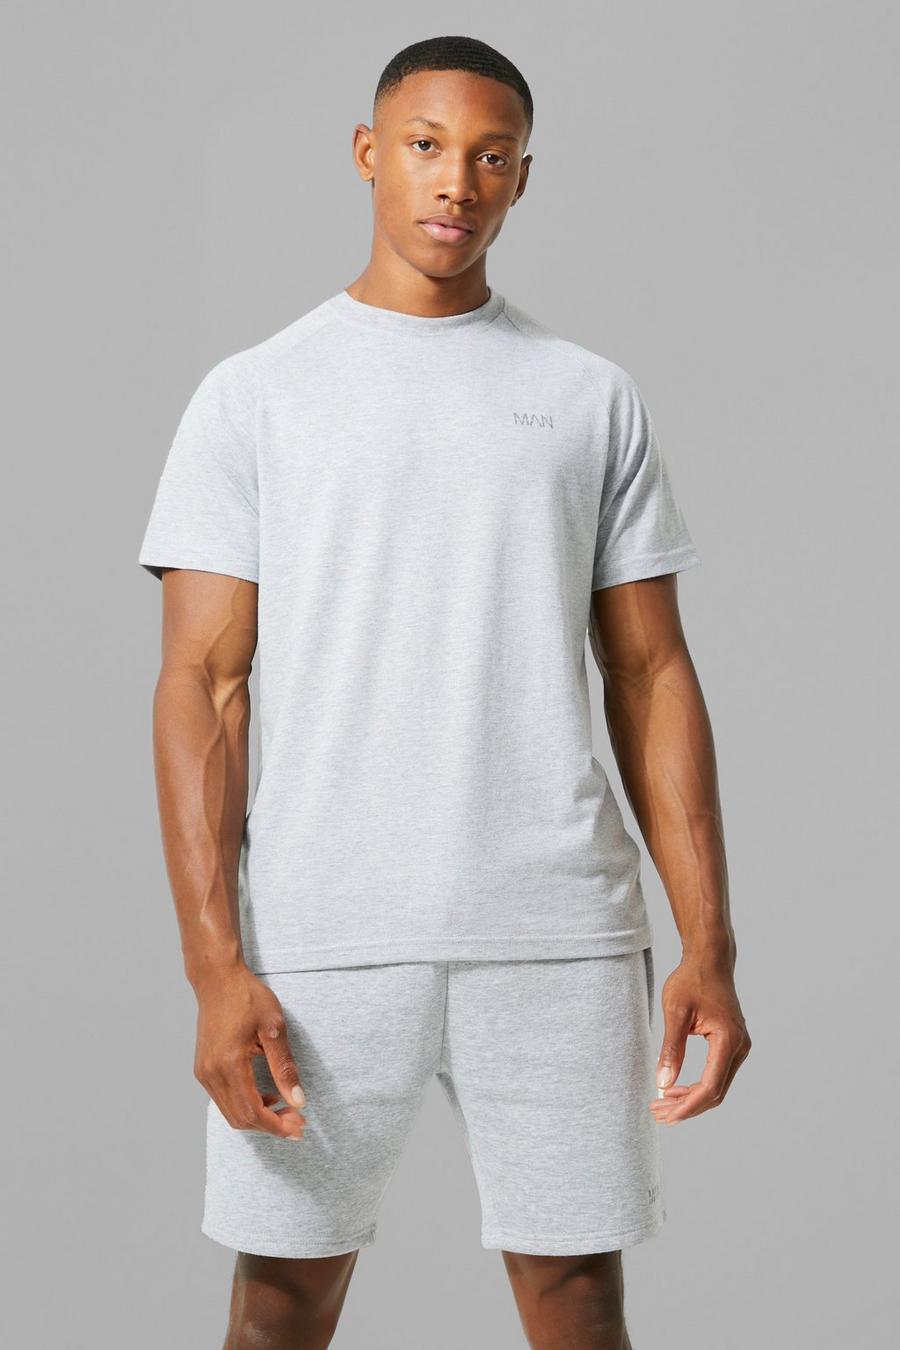 Grey marl Man Active Raglan Fitness T-Shirt